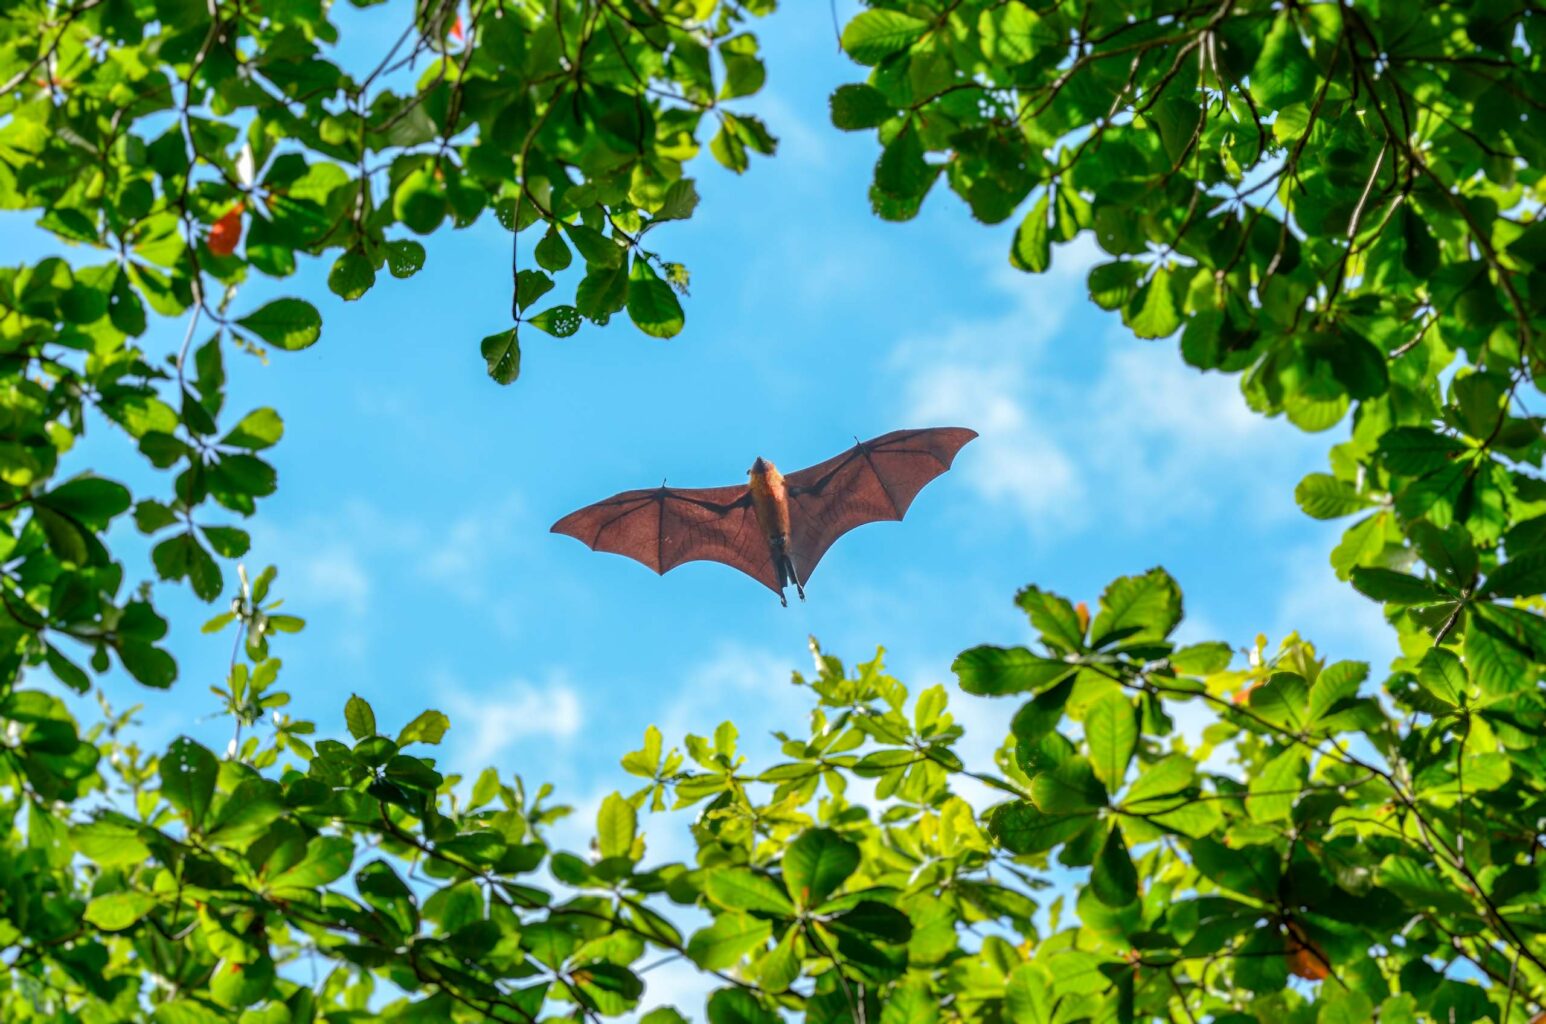 A flying fox, also called a fruit bat, in Madagascar.